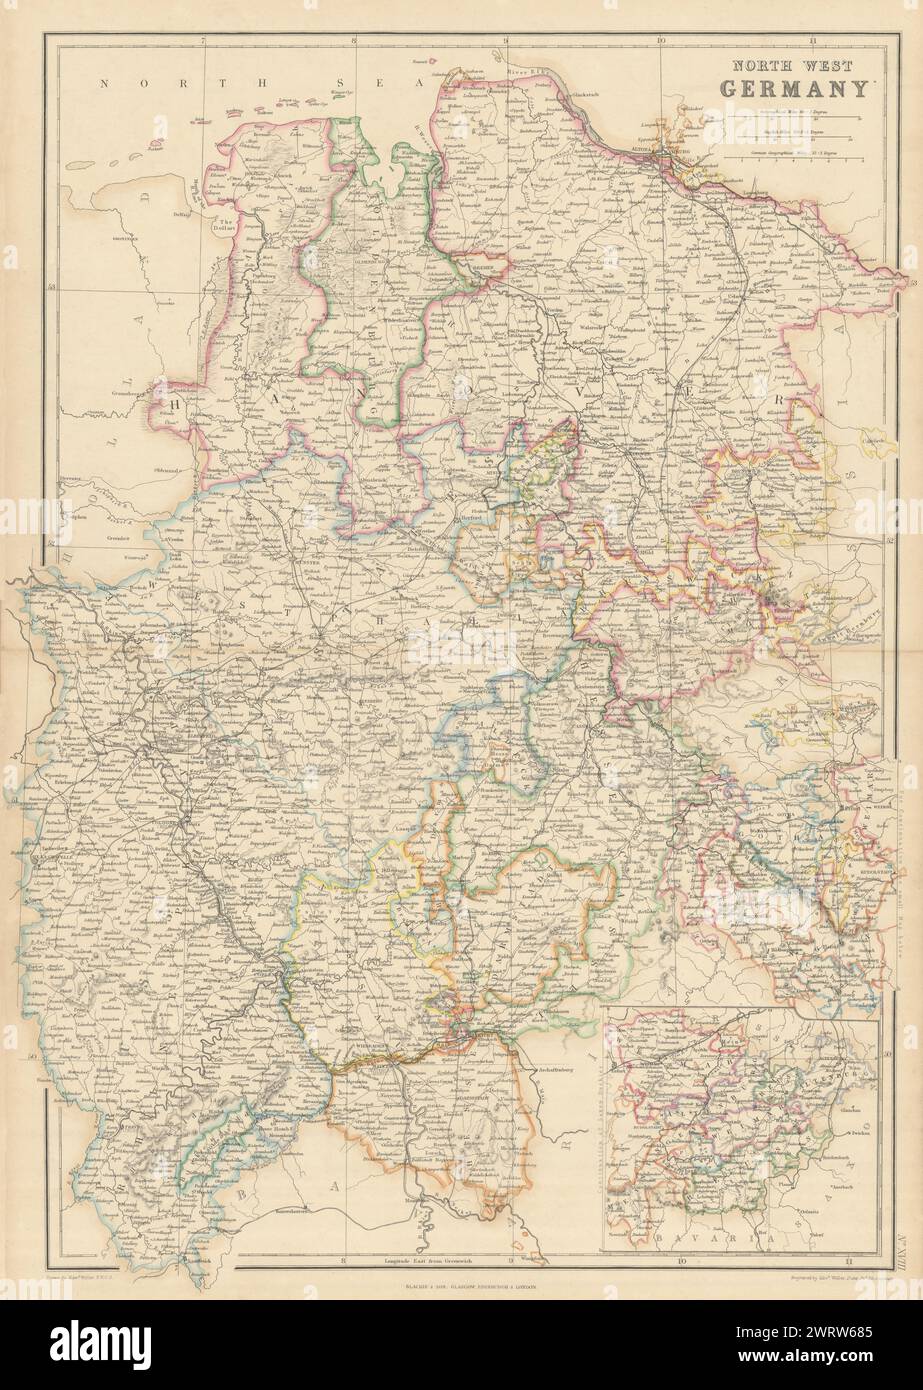 North-West Germany. Hanover, Rhenish Prussia, Nassau, Hesse. WELLER 1860 map Stock Photo